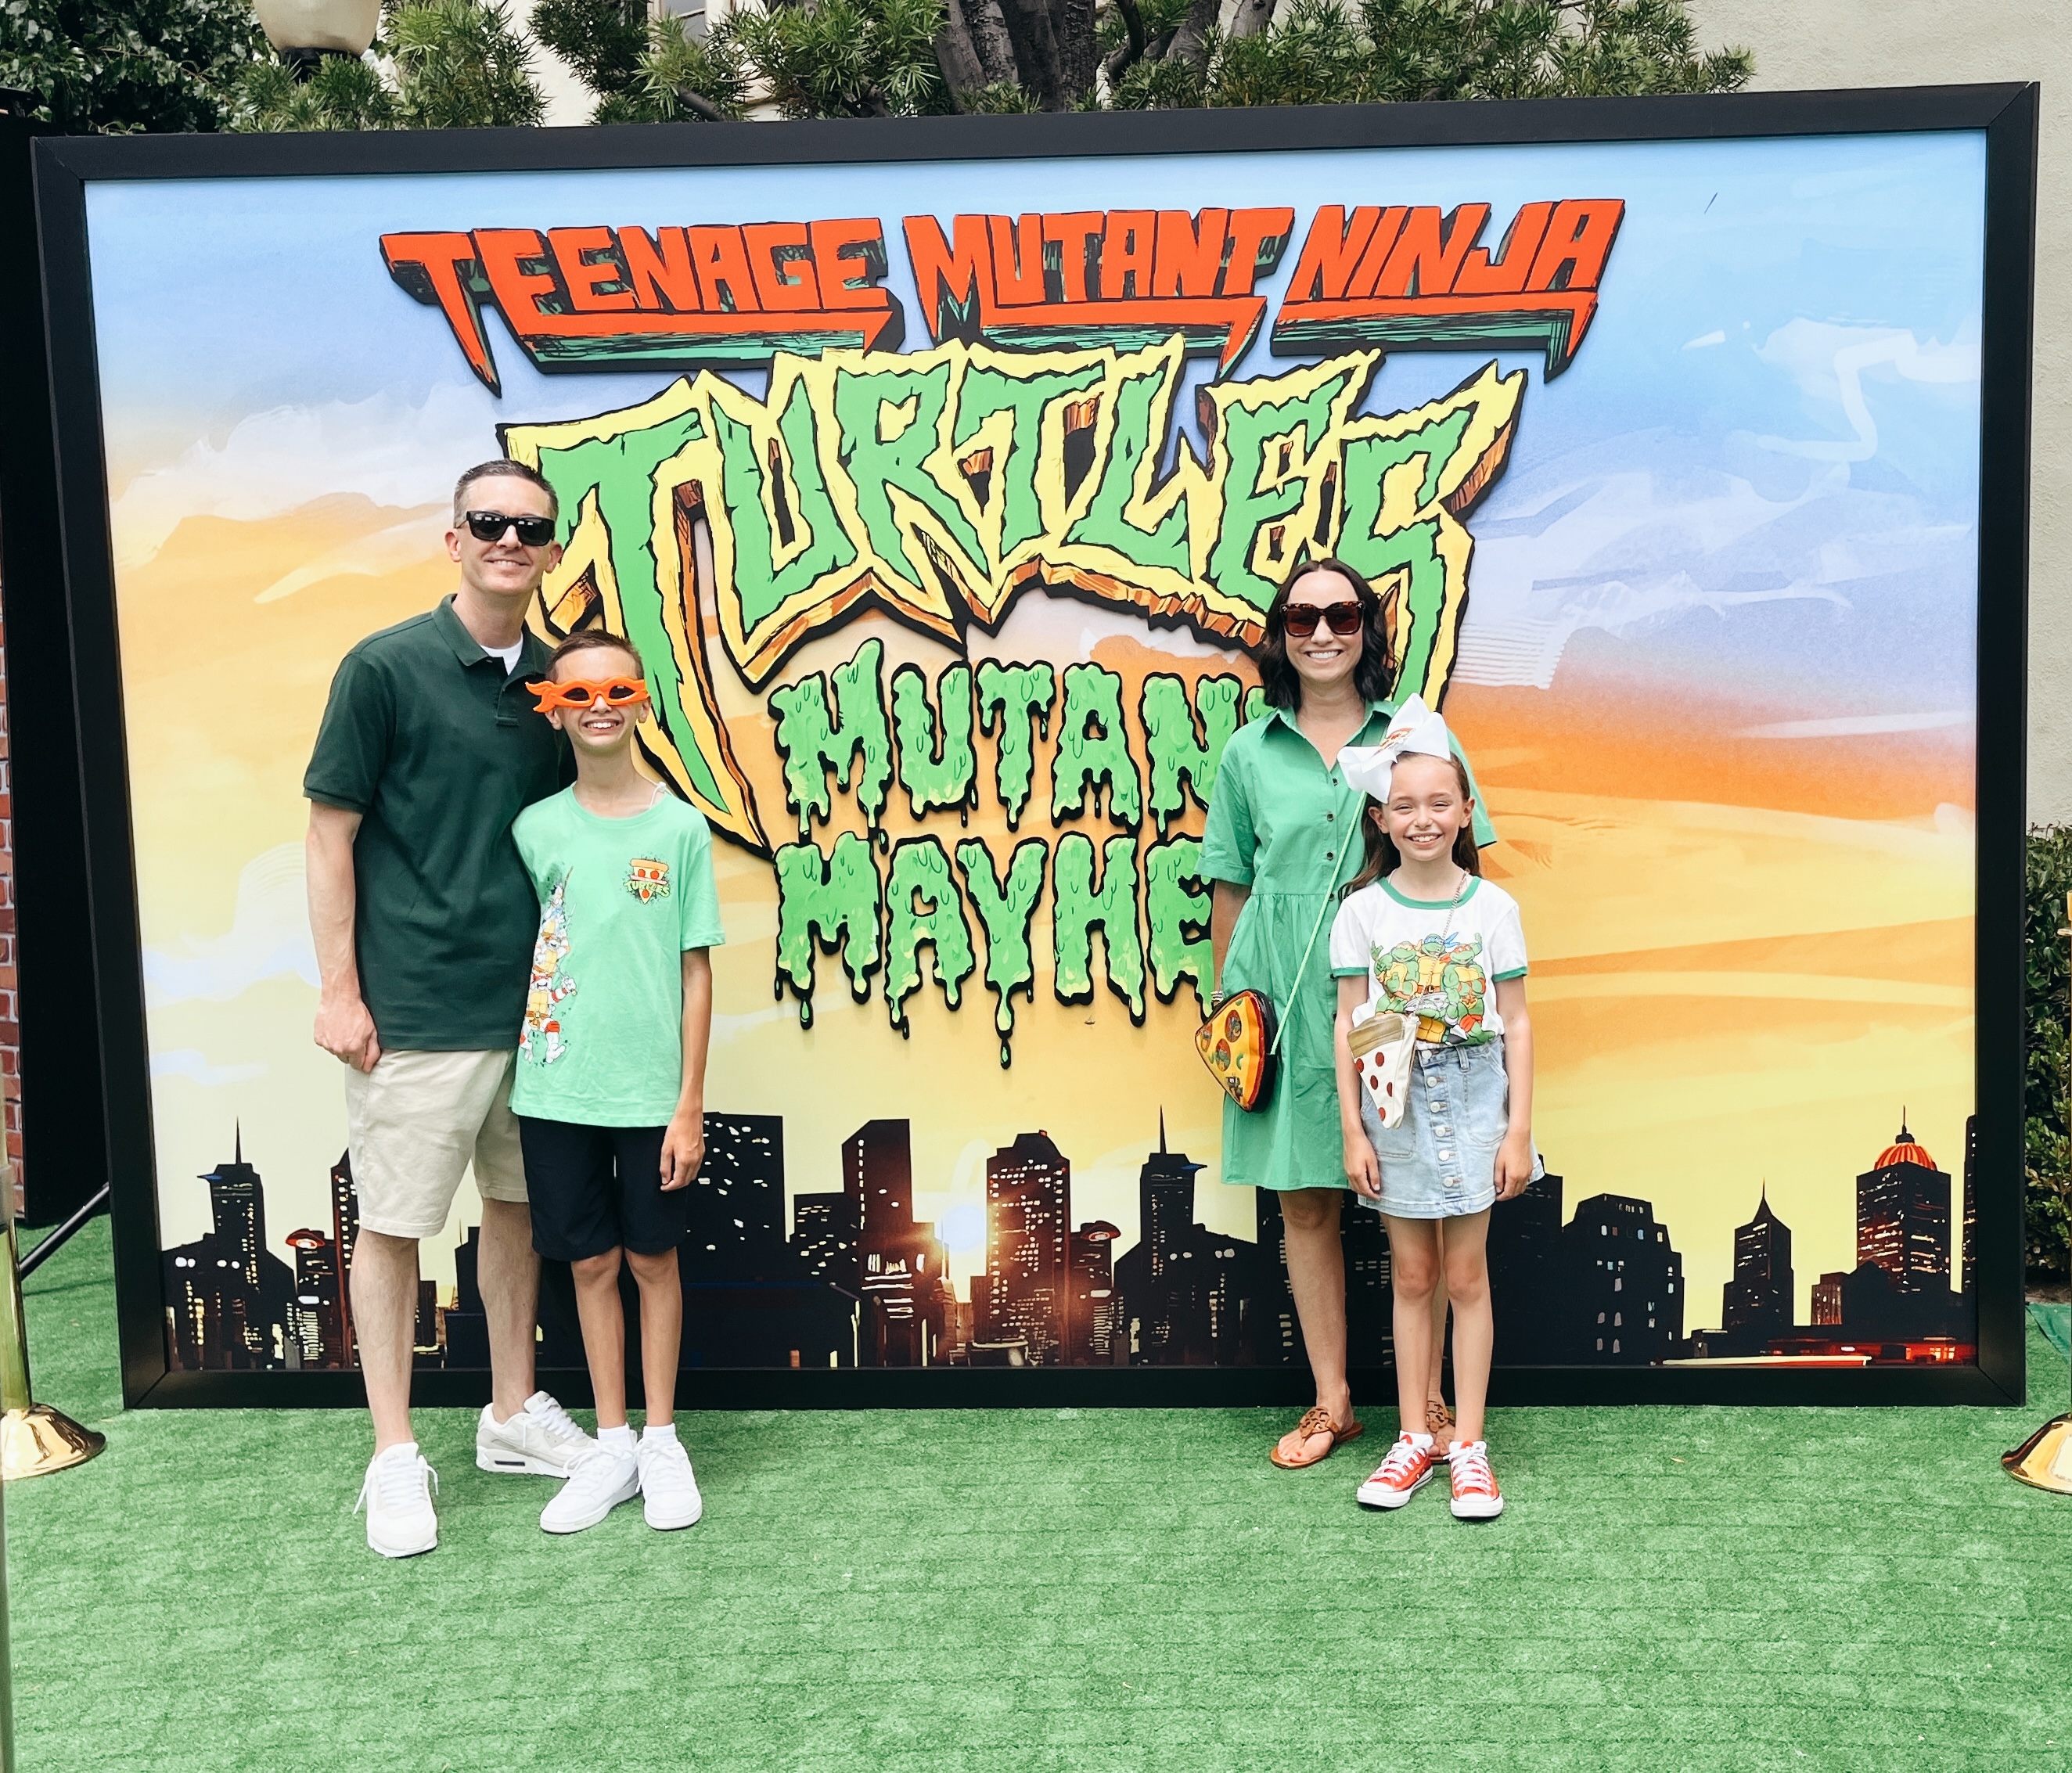 Nickelodeon Boys Teenage Mutant Ninja Turtles Pizza Party Pajama Set 10 Green | Boscov's